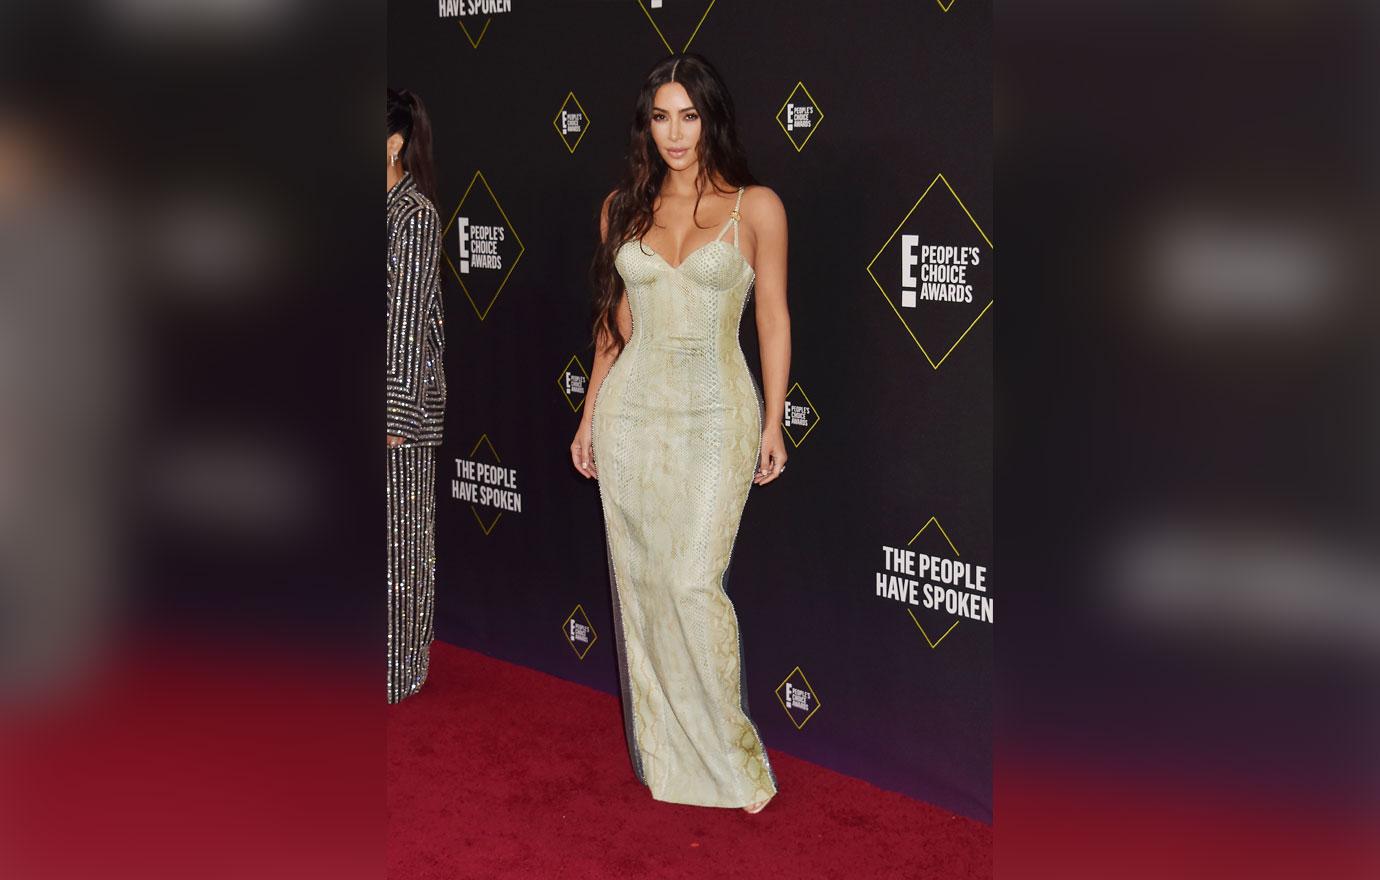 Kim Kardashian to Change Kimono Shapewear Name Amid Backlash